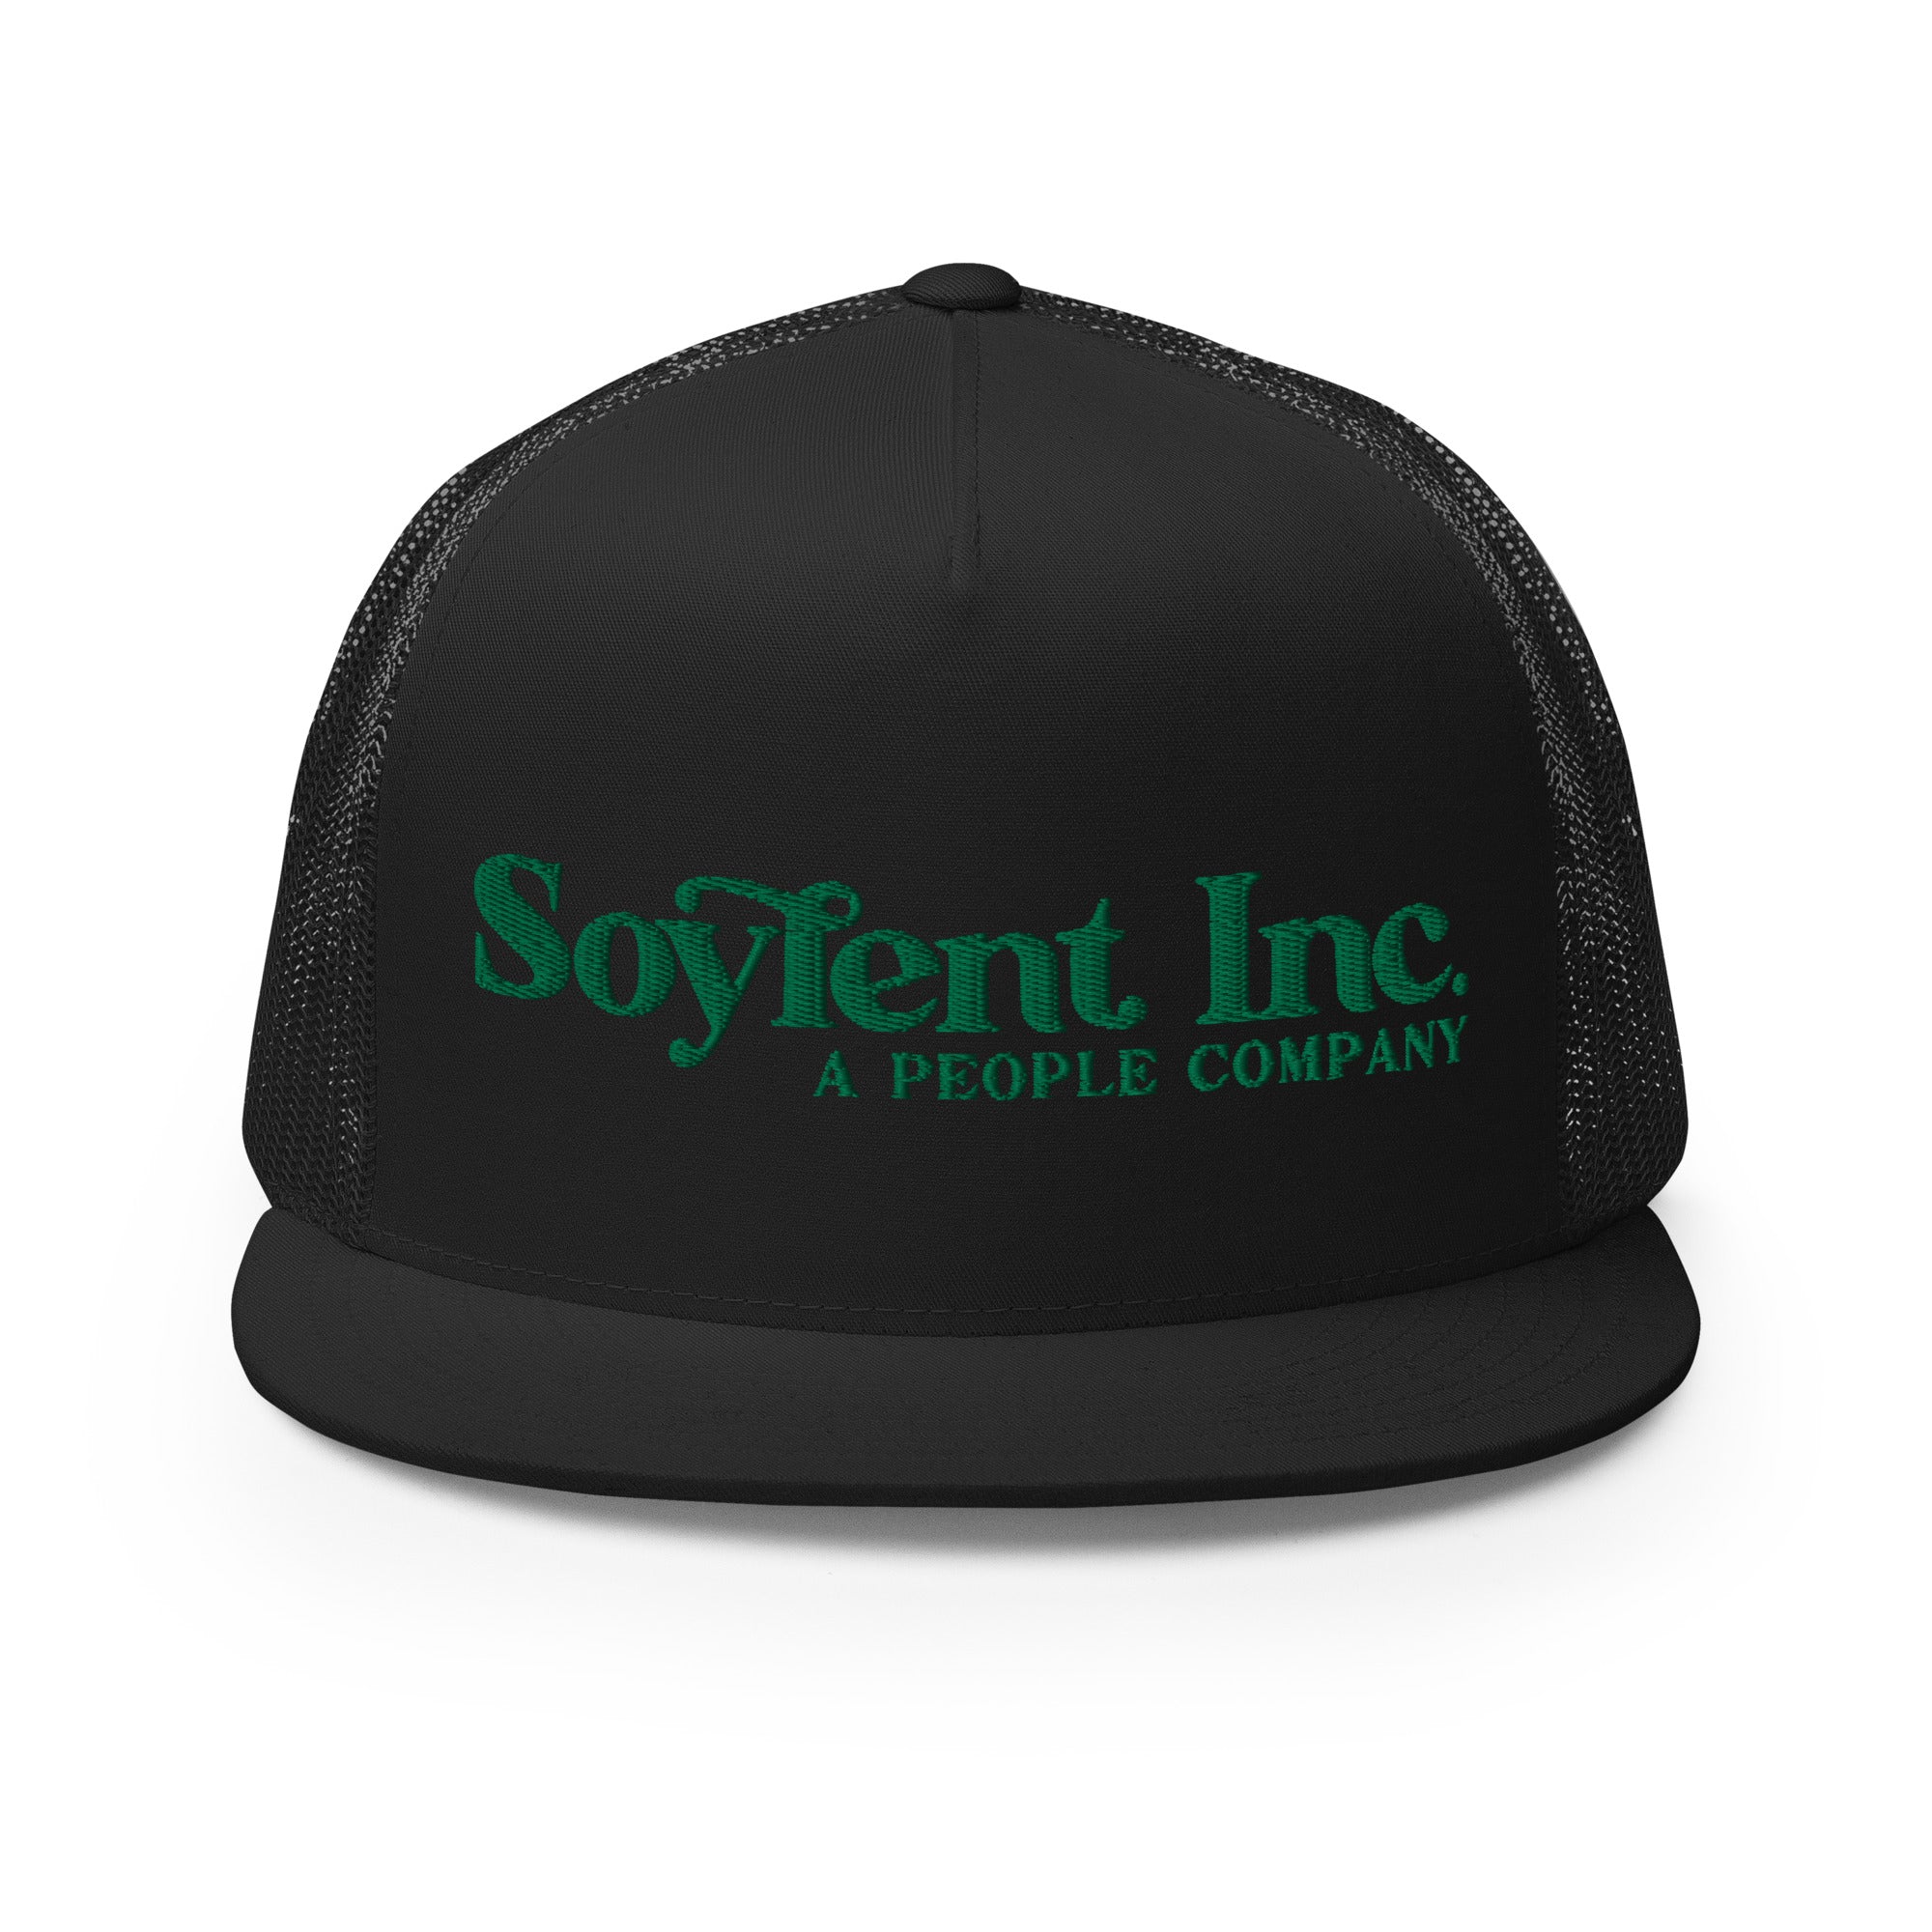 Soylent Green Trucker Cap